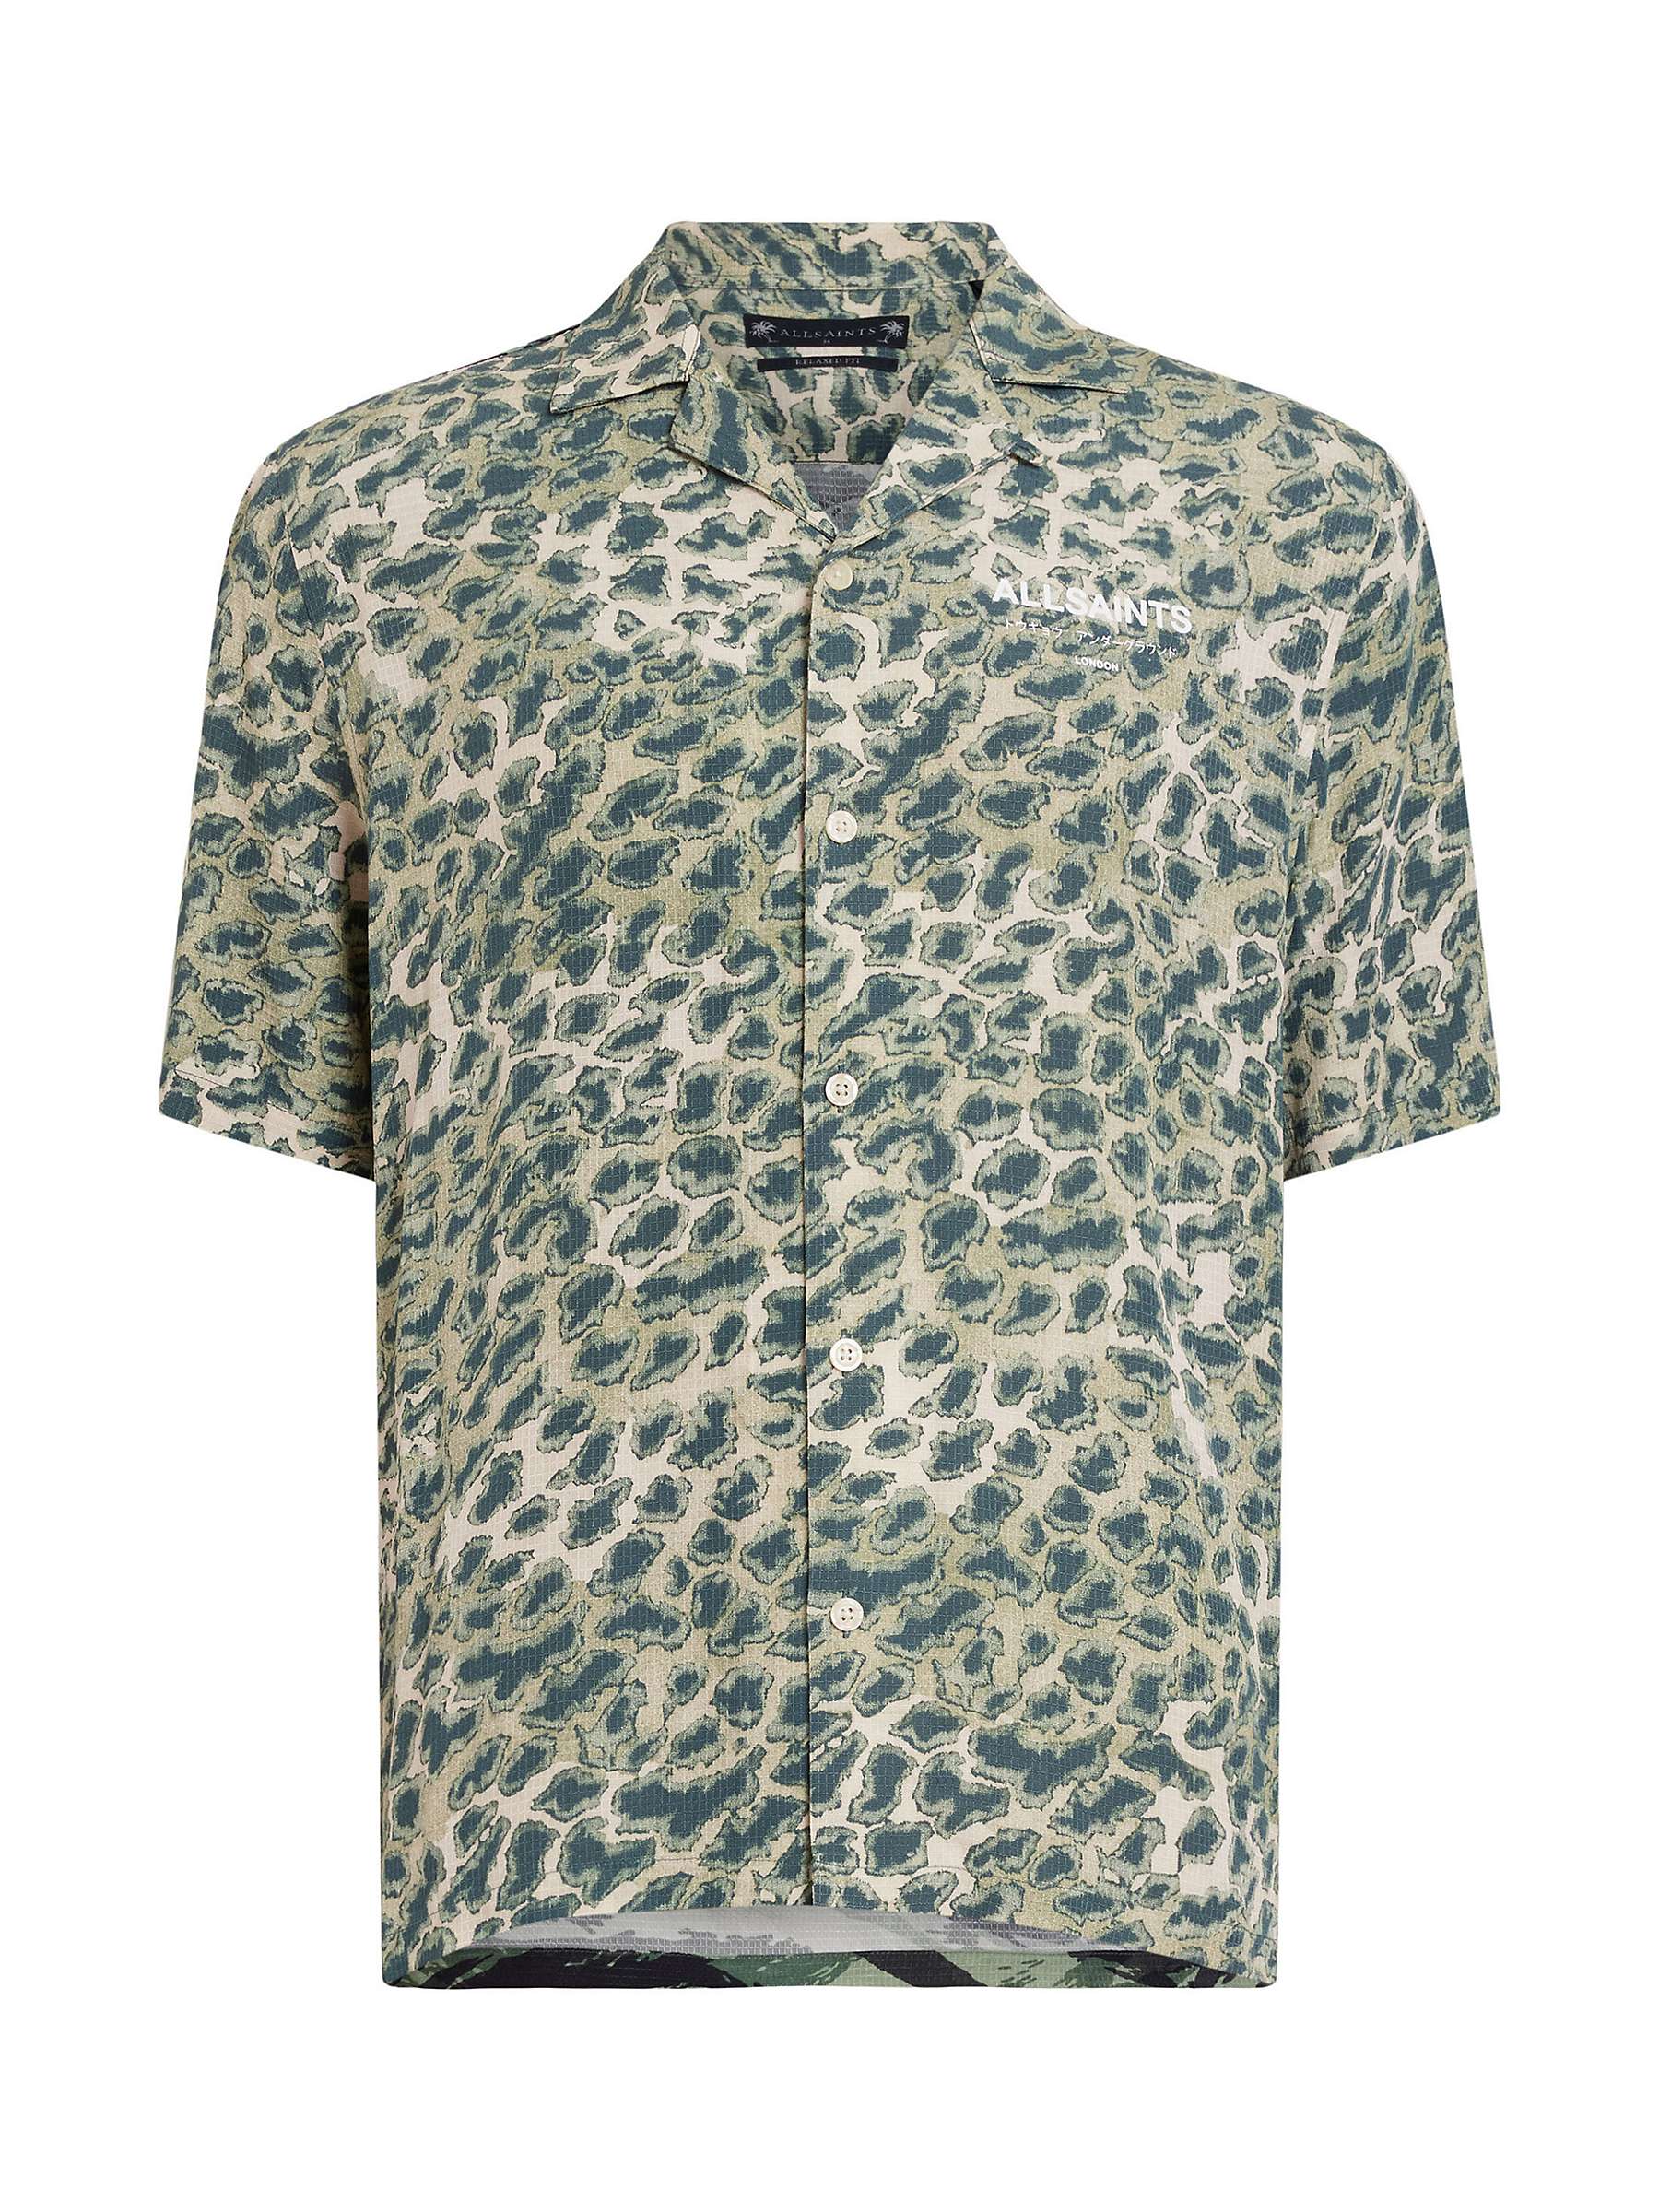 Buy AllSaints Underground CM Short Sleeve Shirt, Green/Multi Online at johnlewis.com